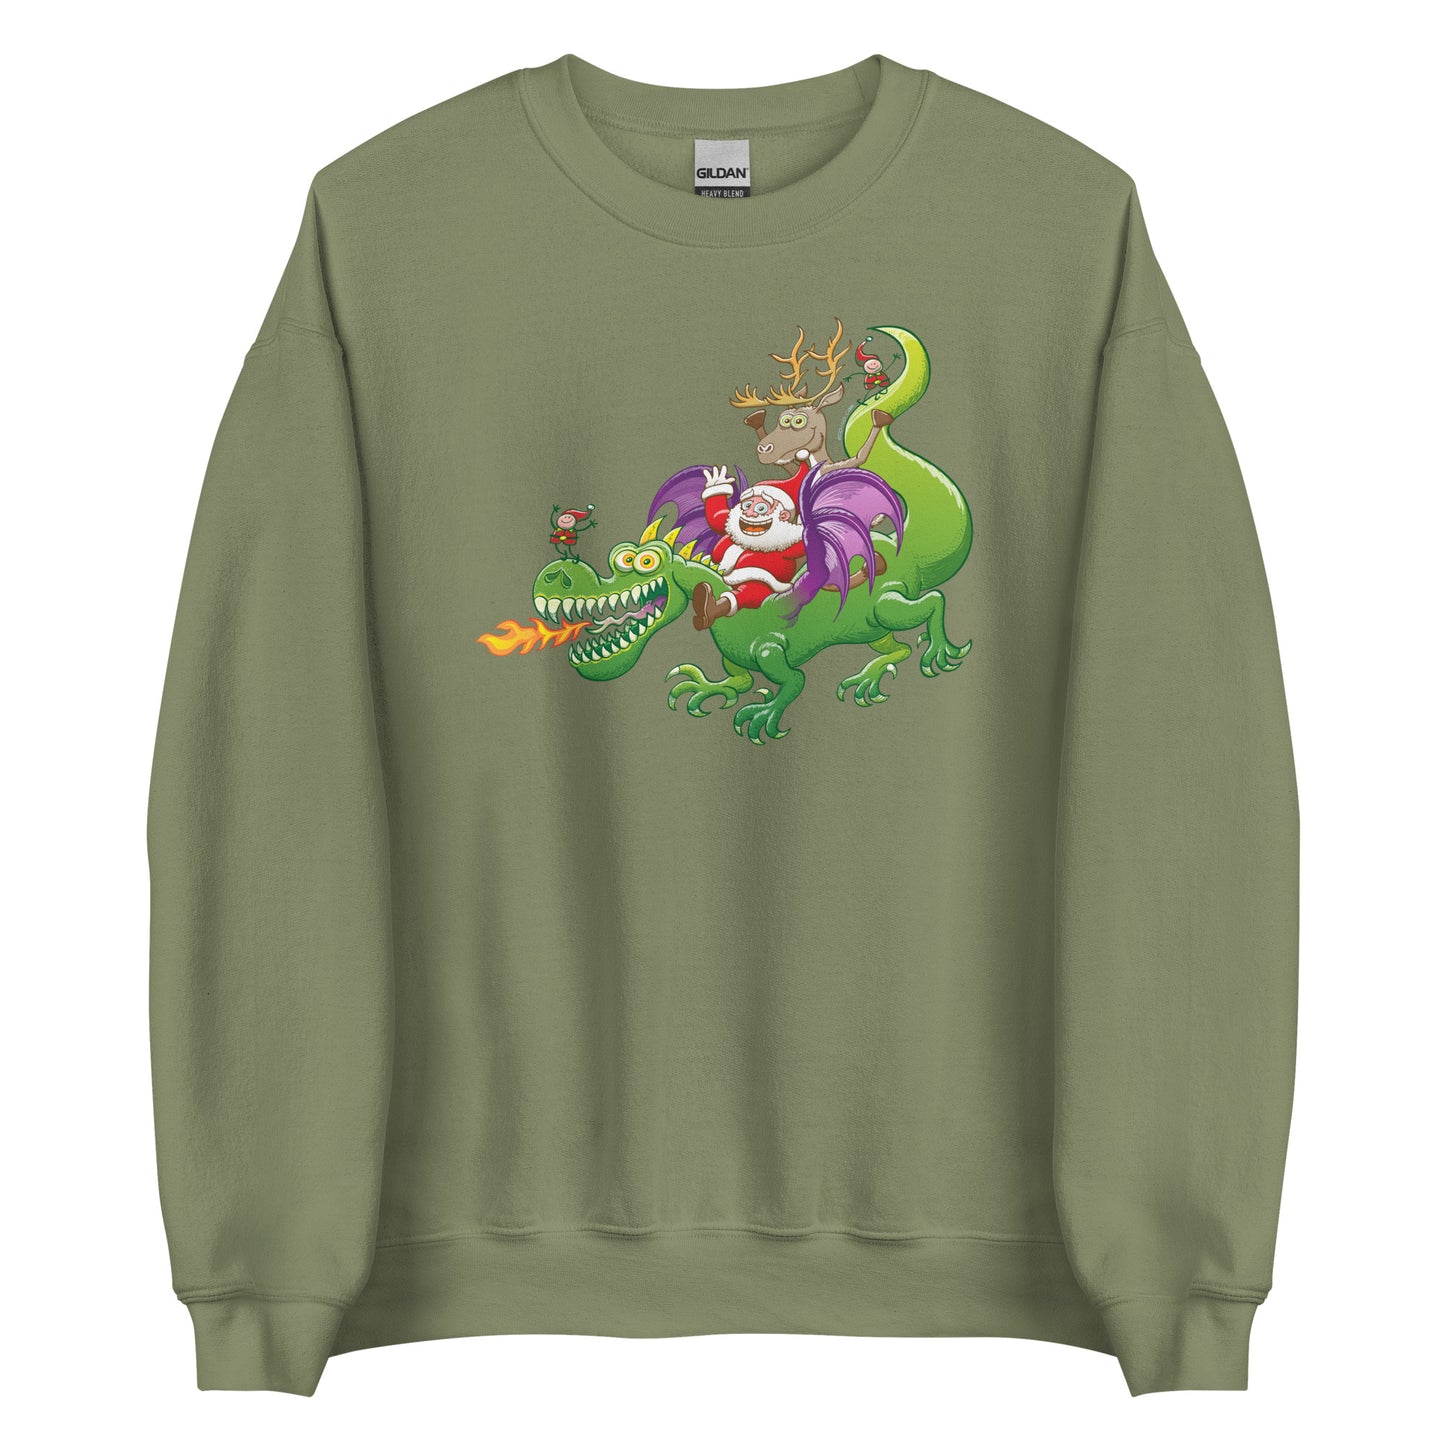 Santa's Dragon-Powered Christmas: A Holiday Adventure - Unisex Sweatshirt. Military green. Front view